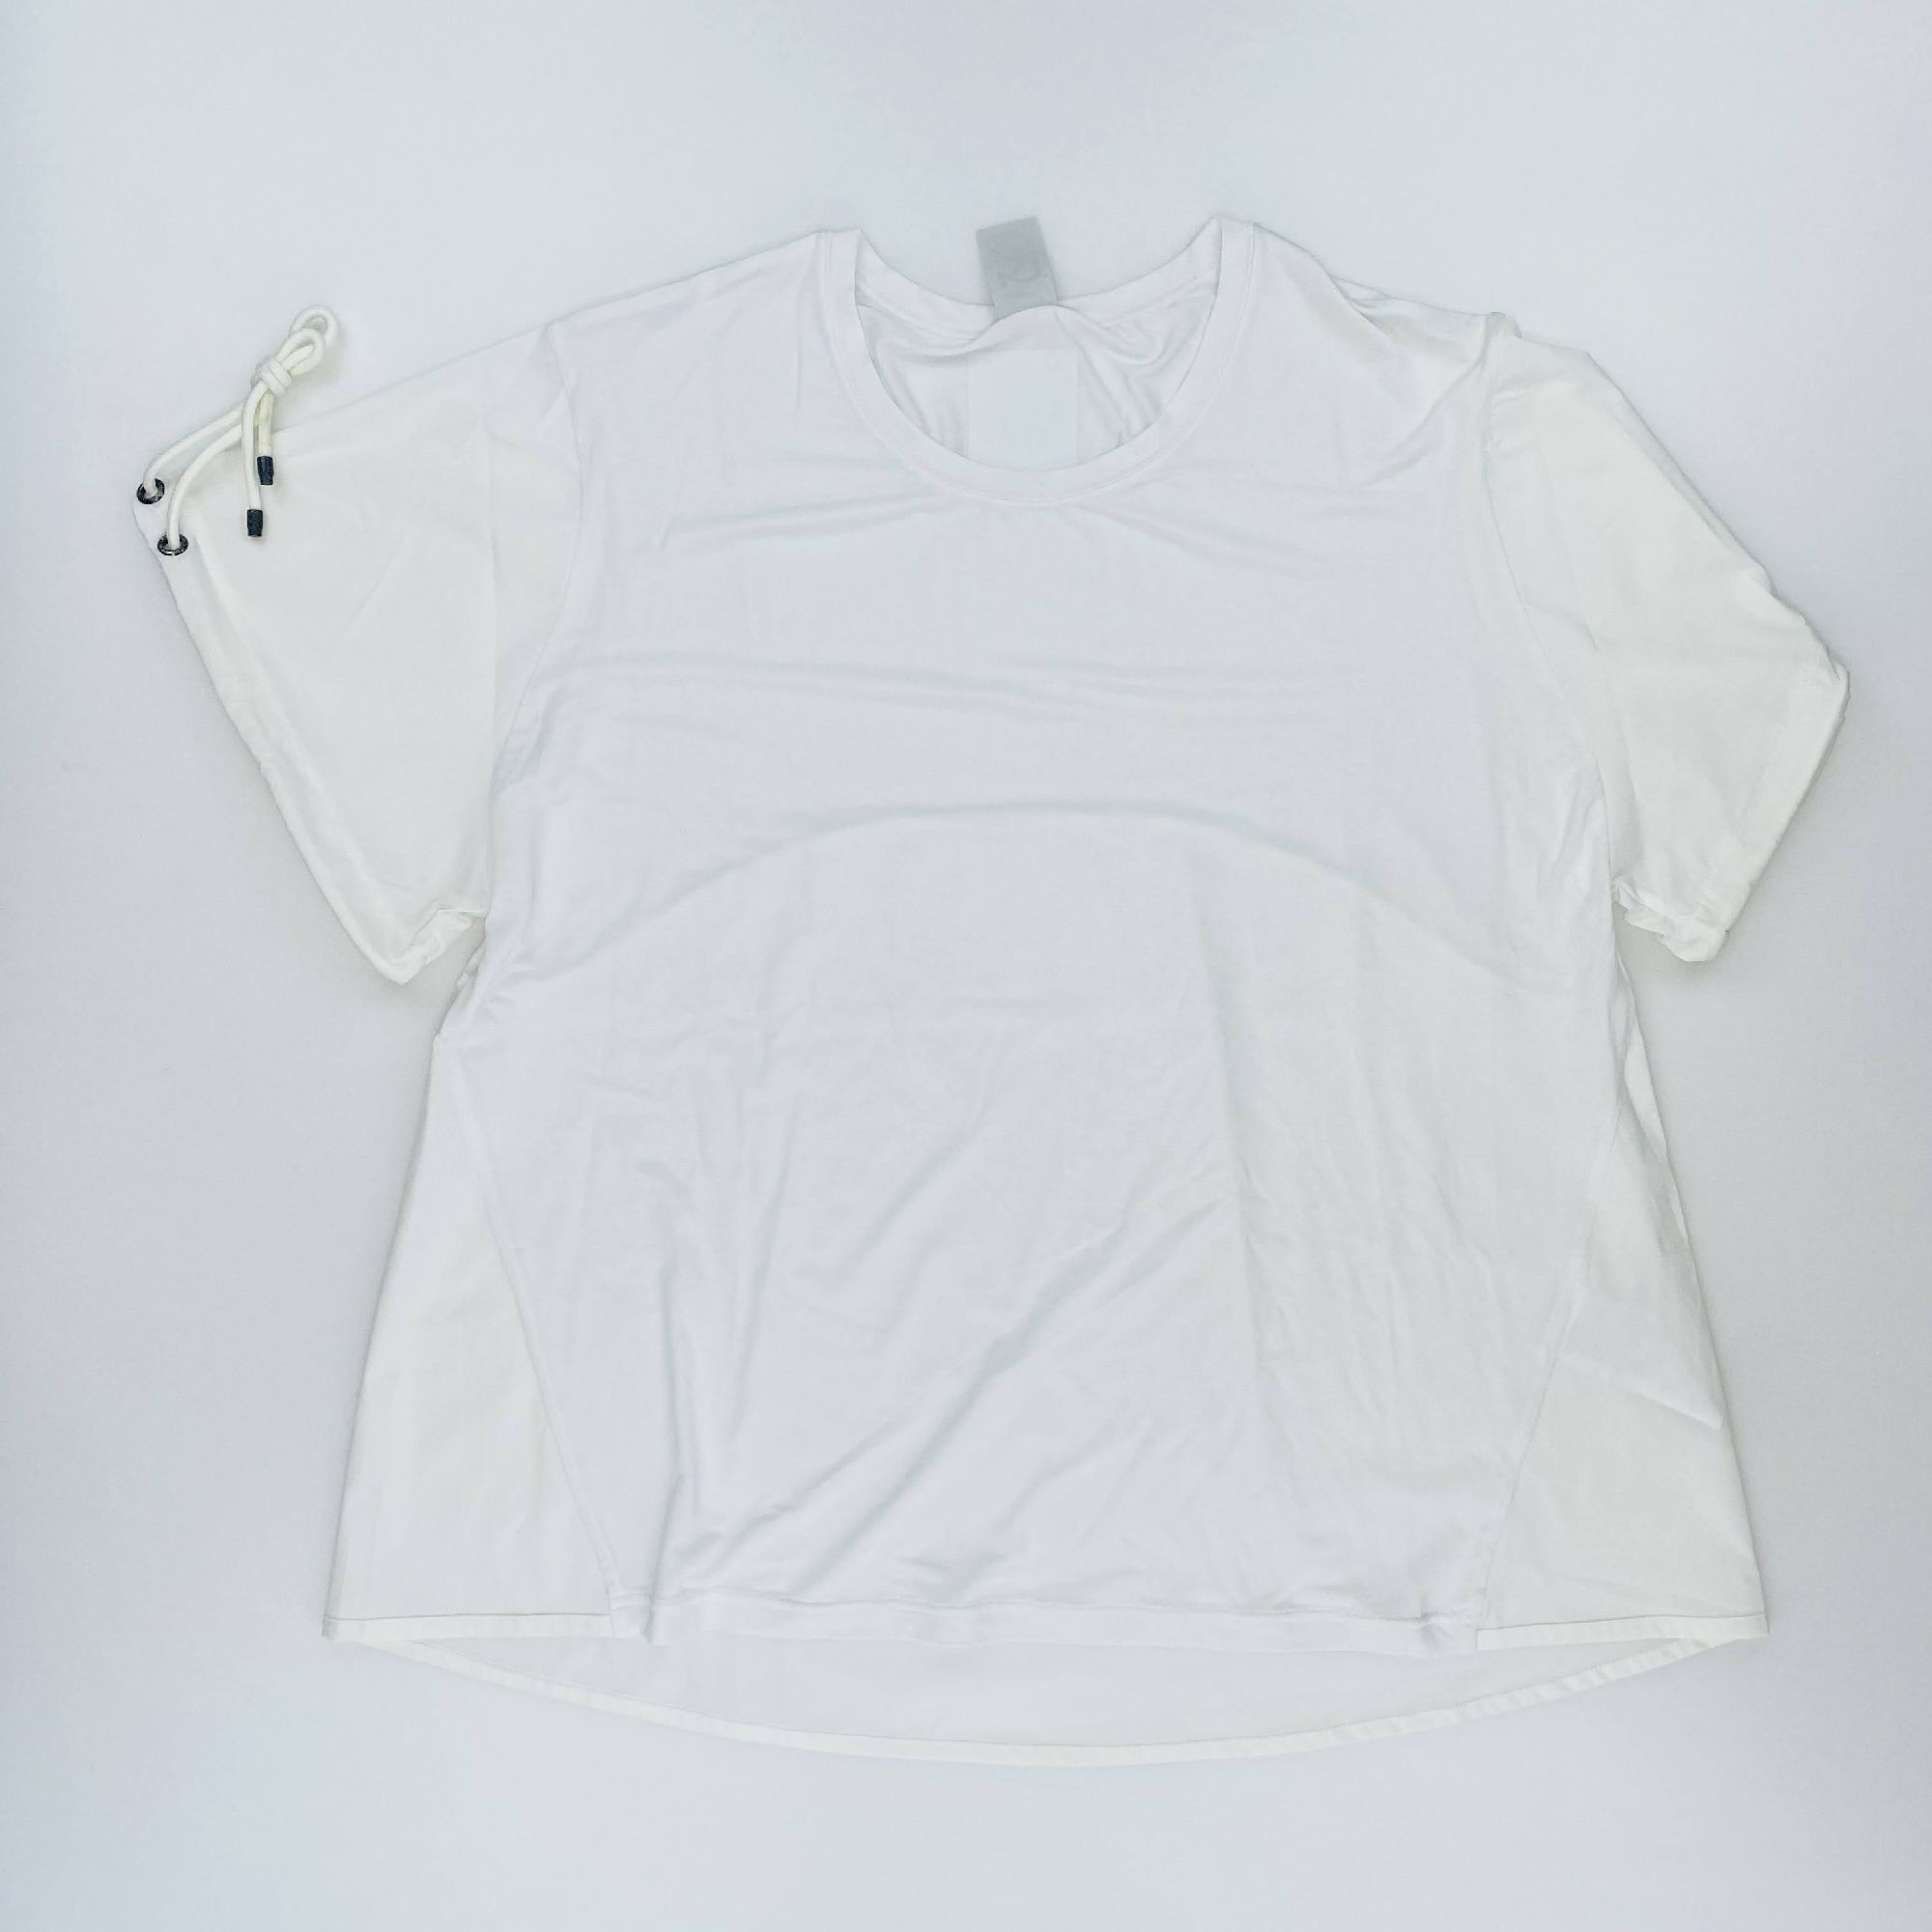 Kari Traa Voss Tee - T-shirt di seconda mano - Donna - Bianco - M | Hardloop